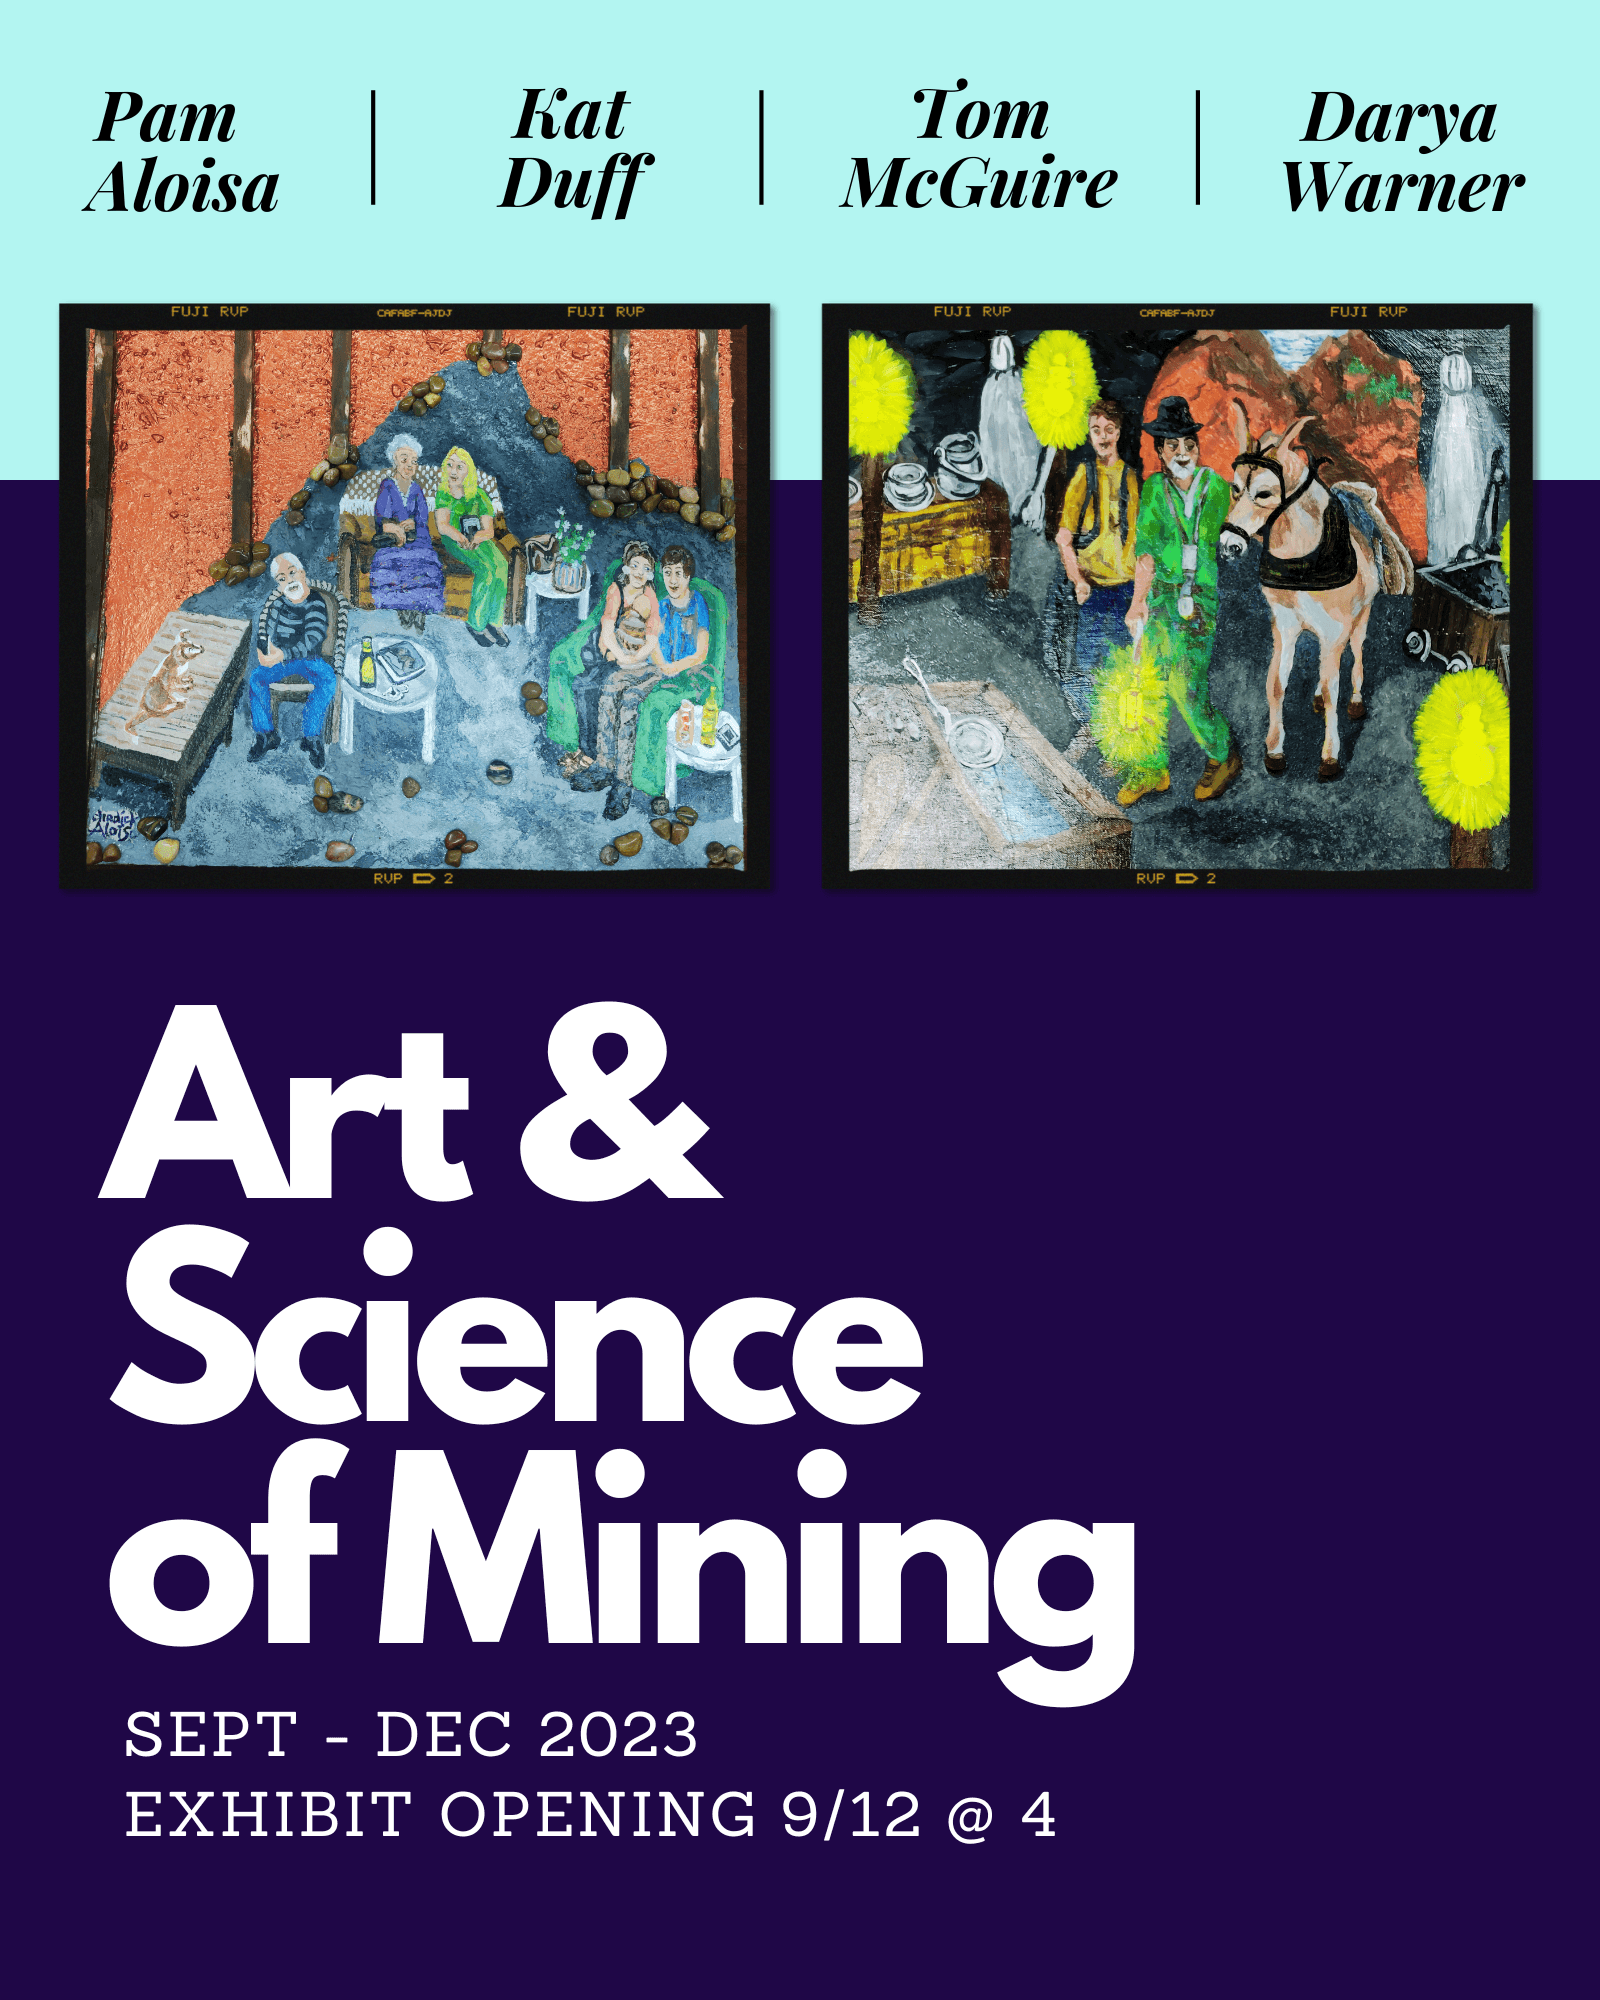 Art & Science of Mining Exhibit Opening